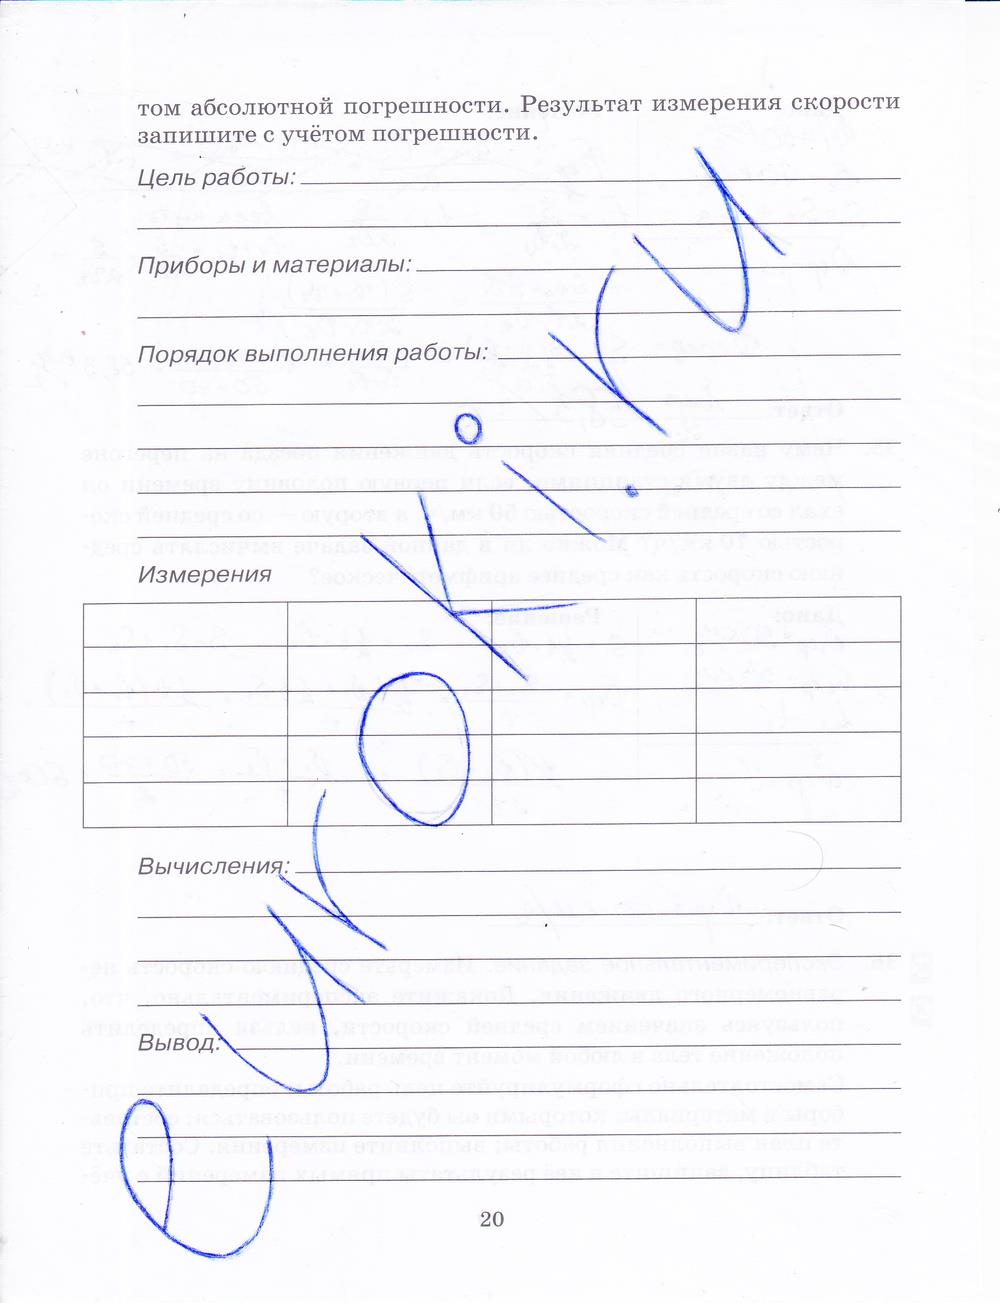 гдз 9 класс рабочая тетрадь страница 20 физика Пурышева, Важеевская, Чаругин